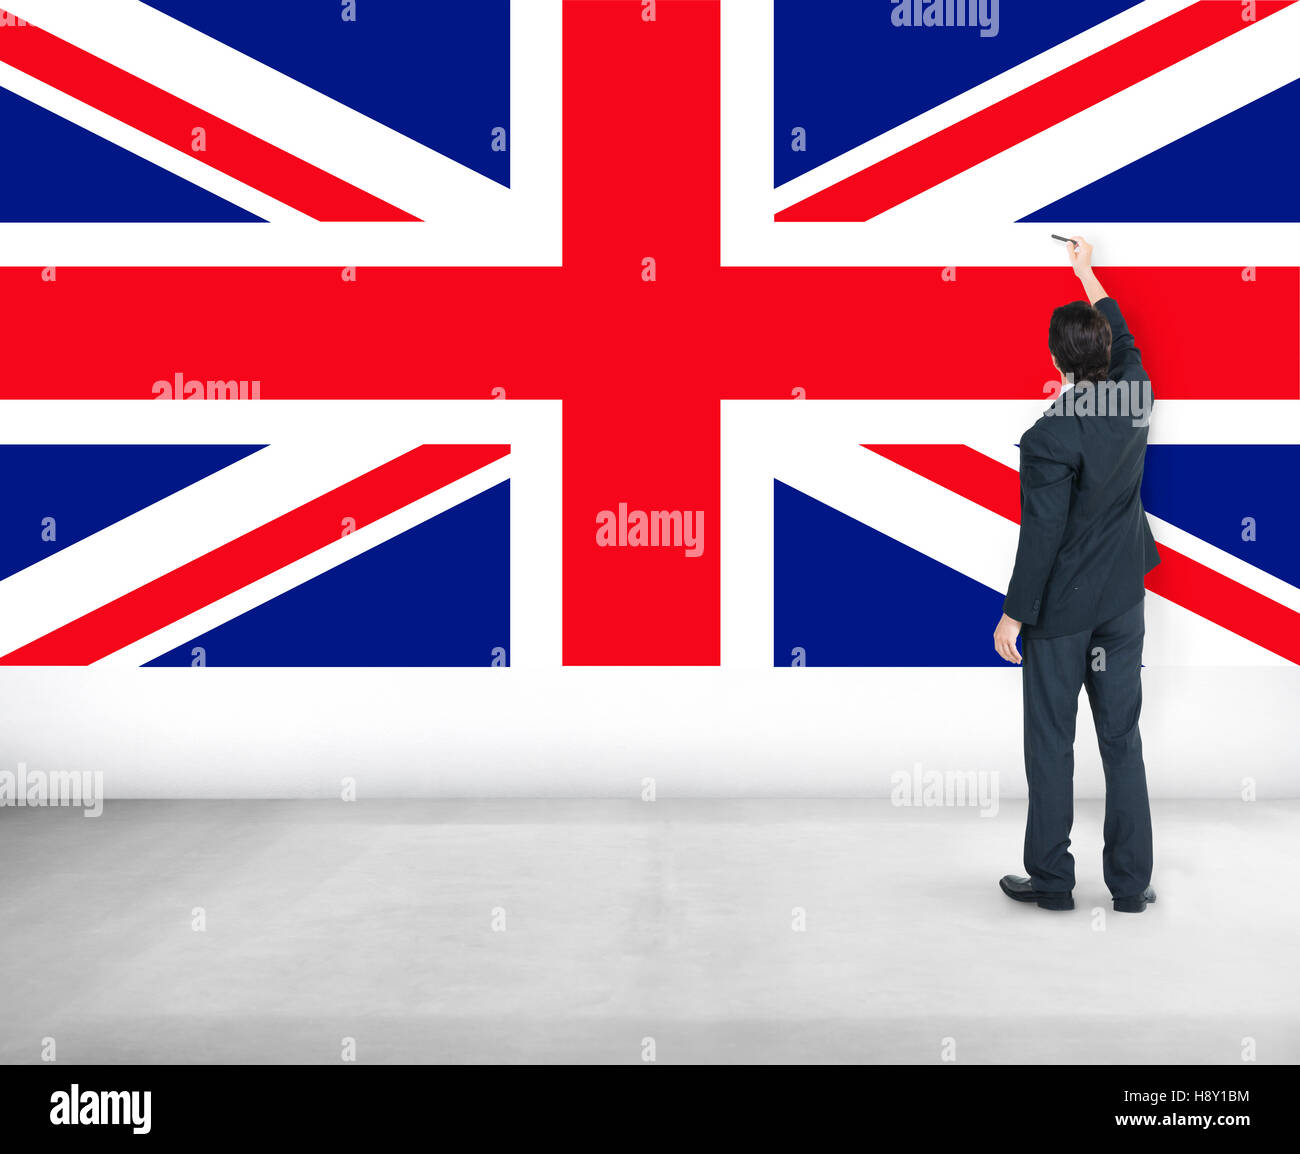 Inglaterra la bandera del país nacionalidad cultura libertad concepto Foto de stock